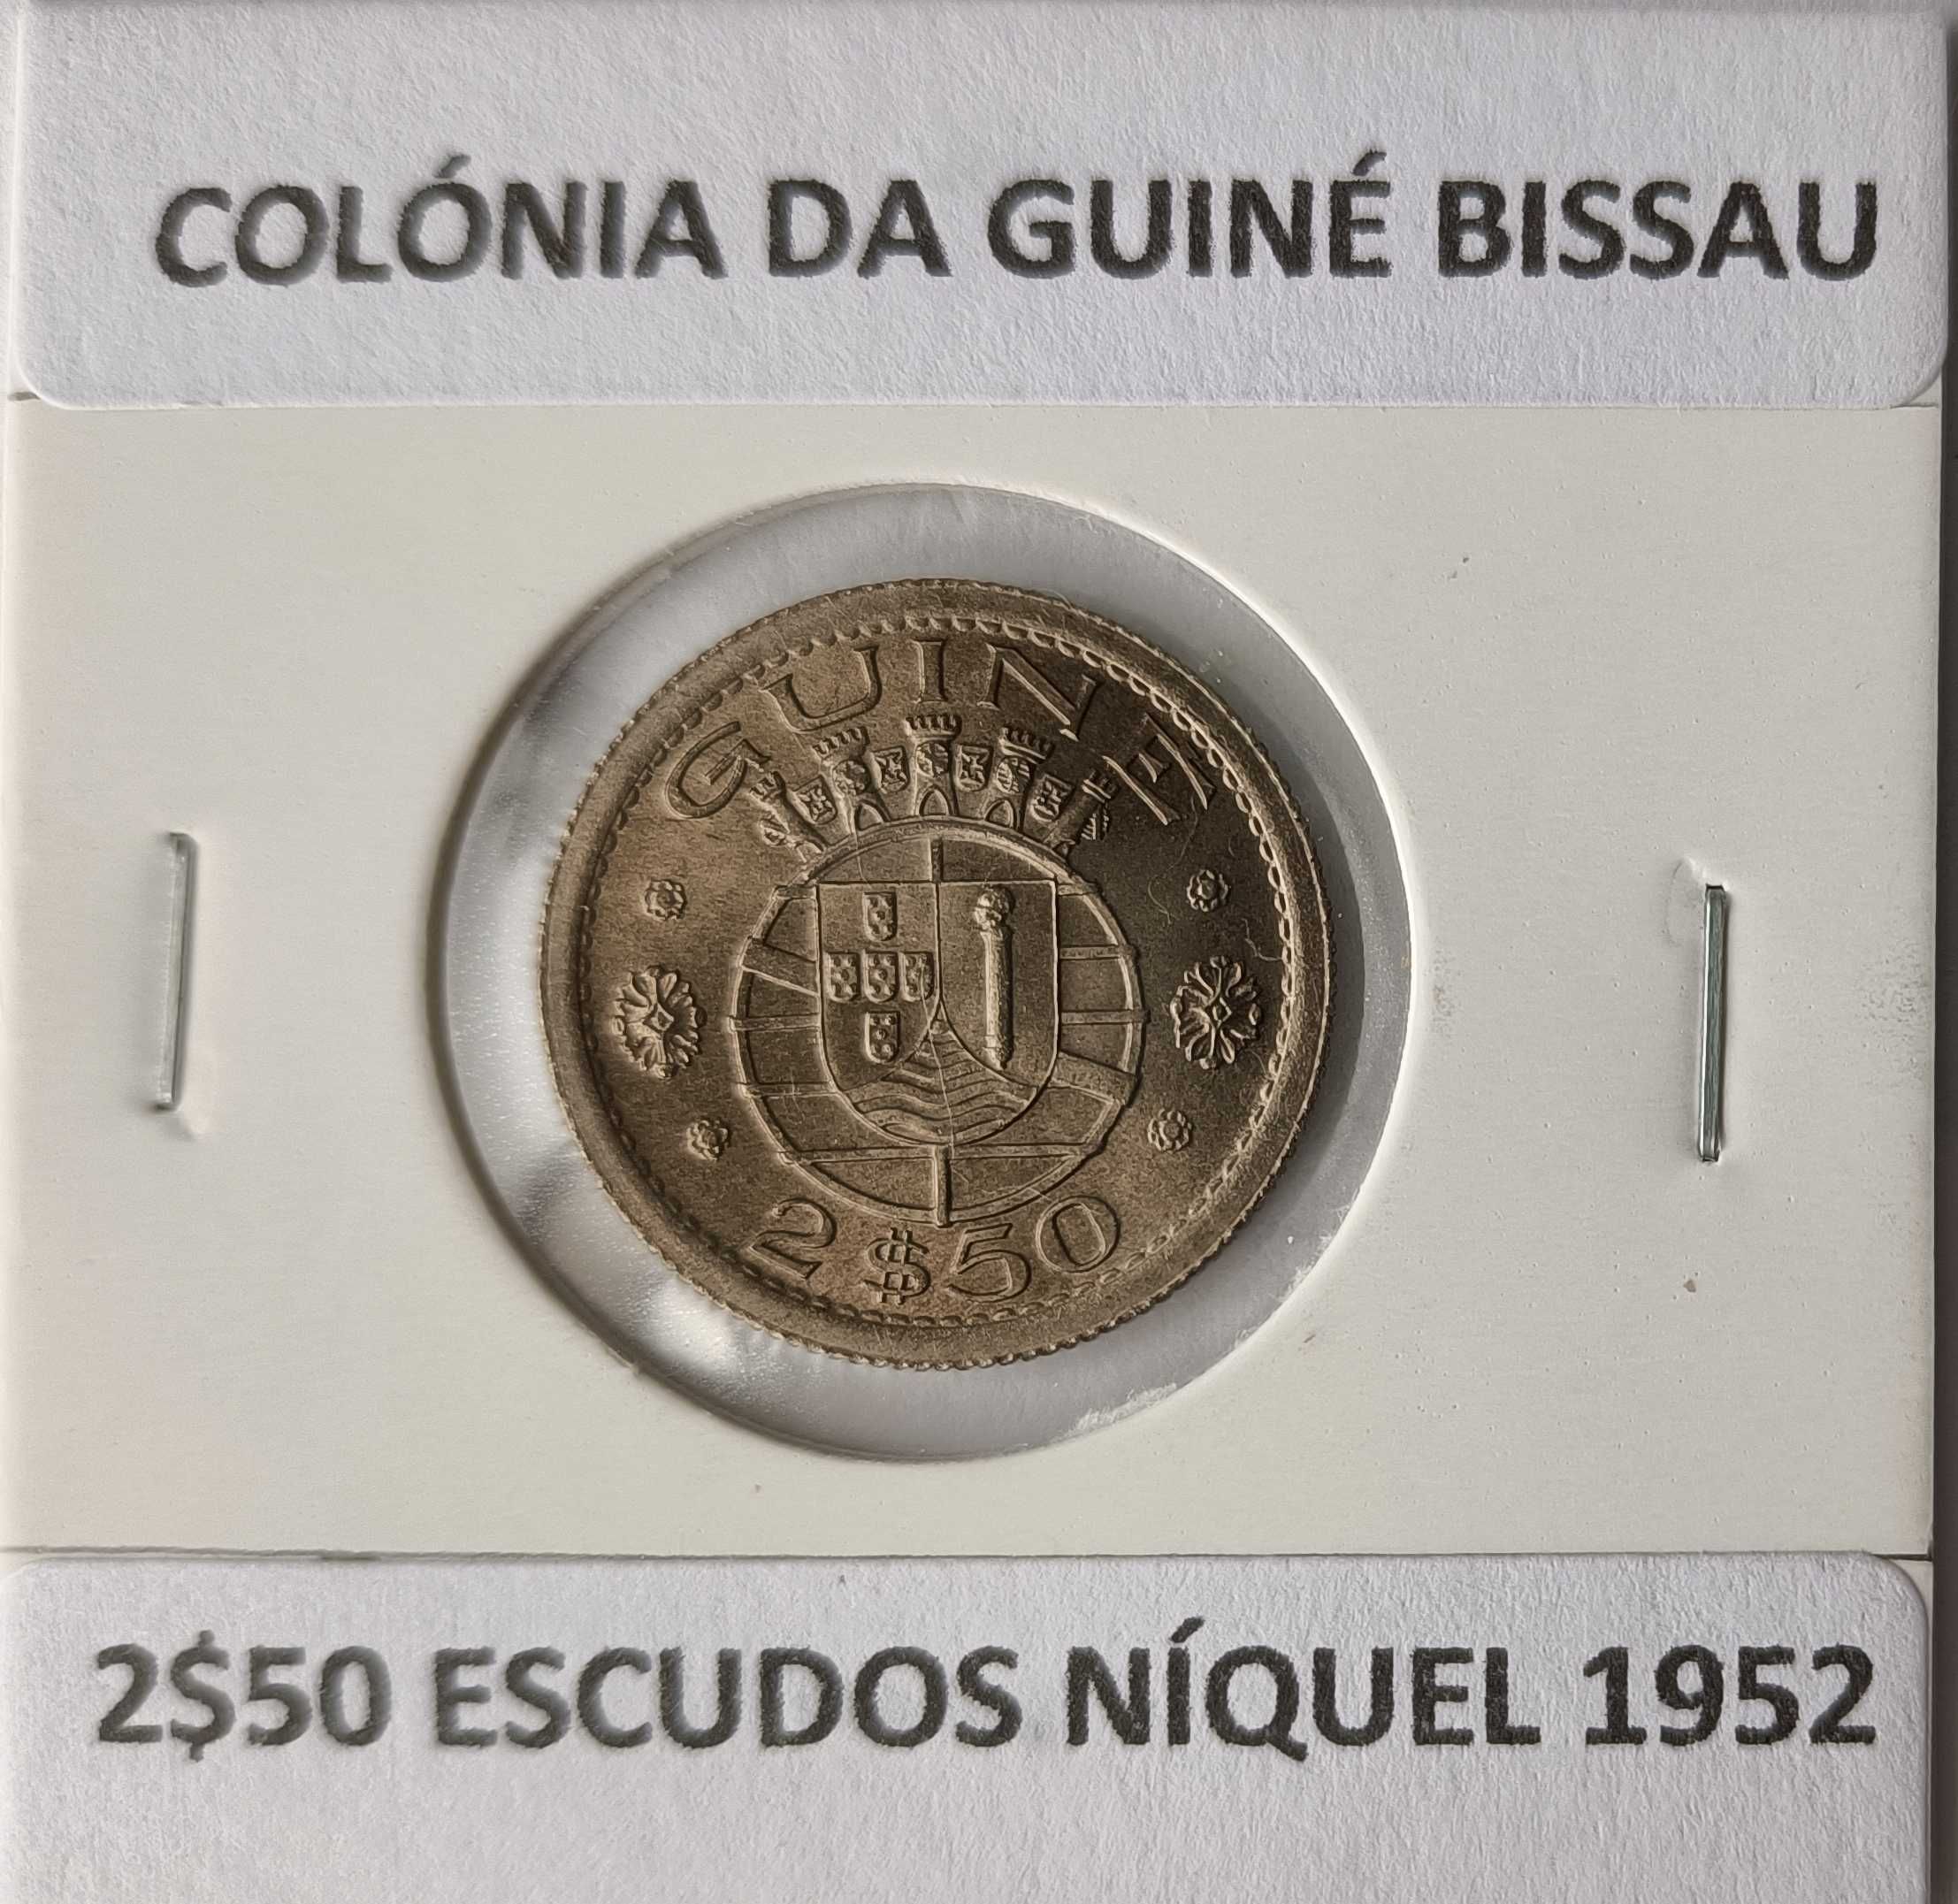 1 Moeda Portuguesa Circulada na Ex Colónia da Guiné Bissau